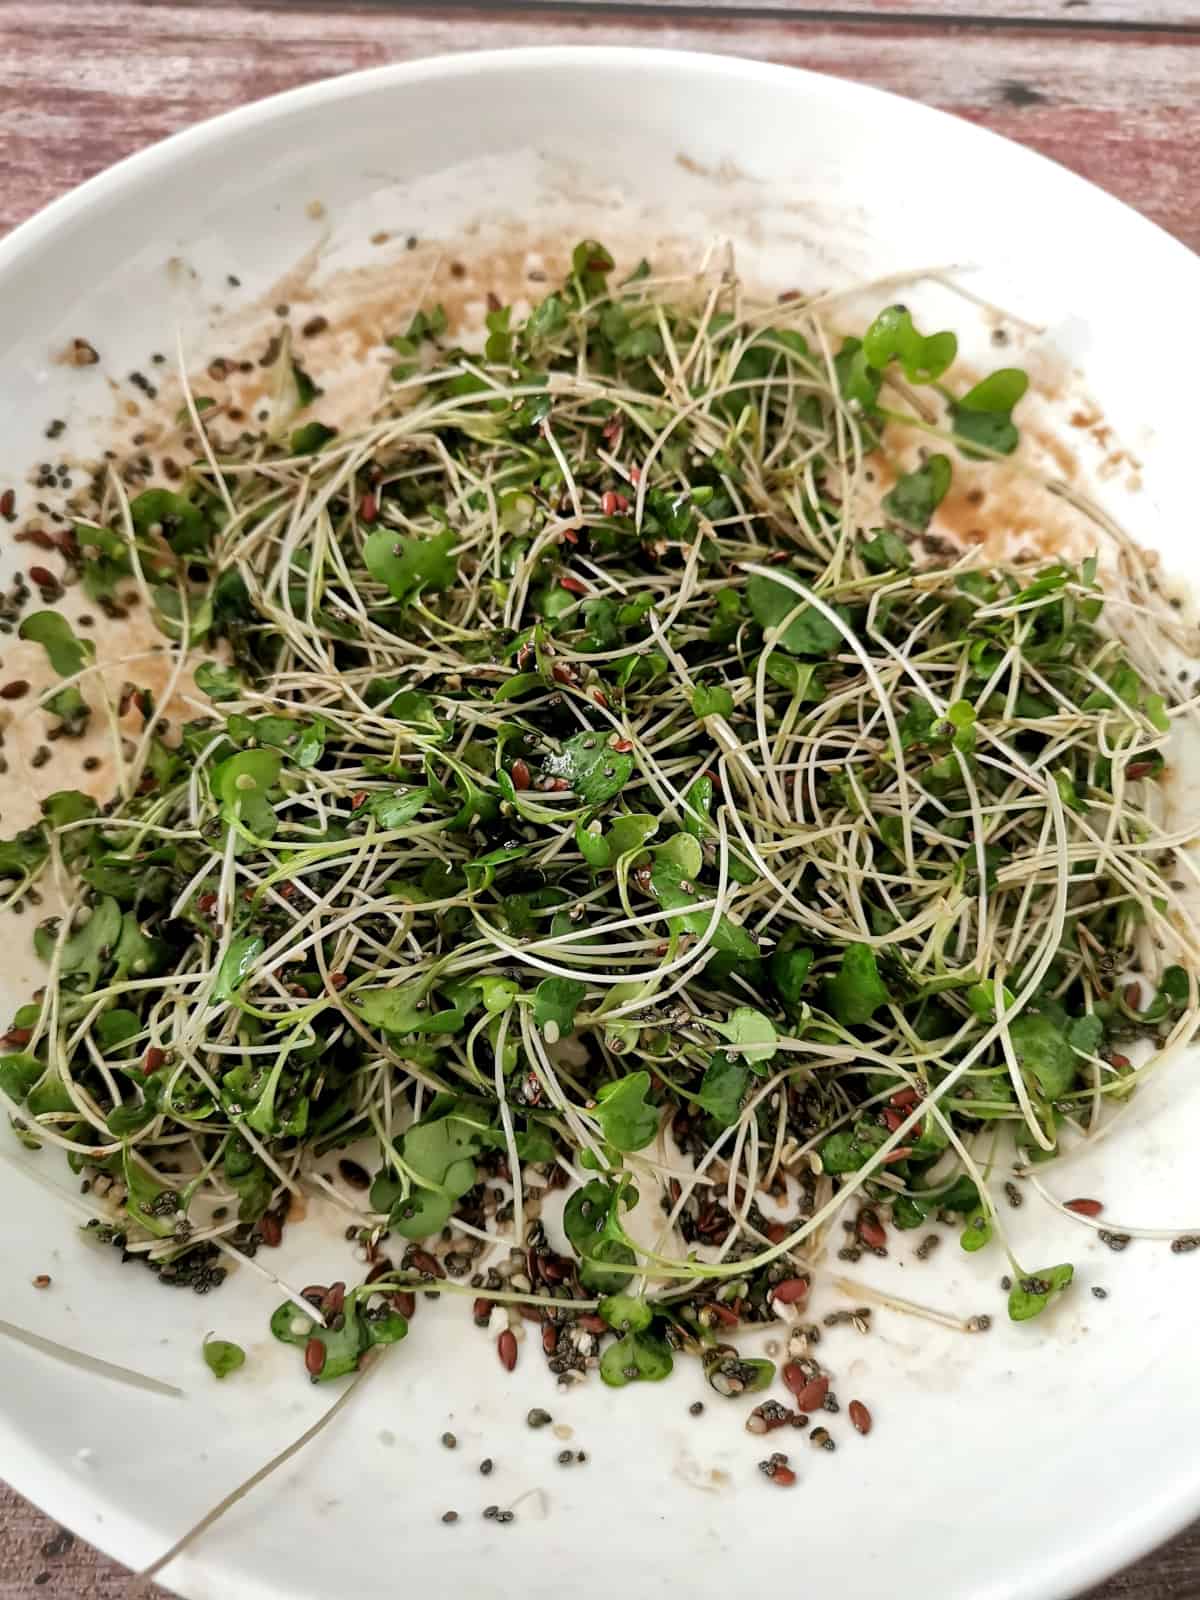 microgreens salad on white plate.